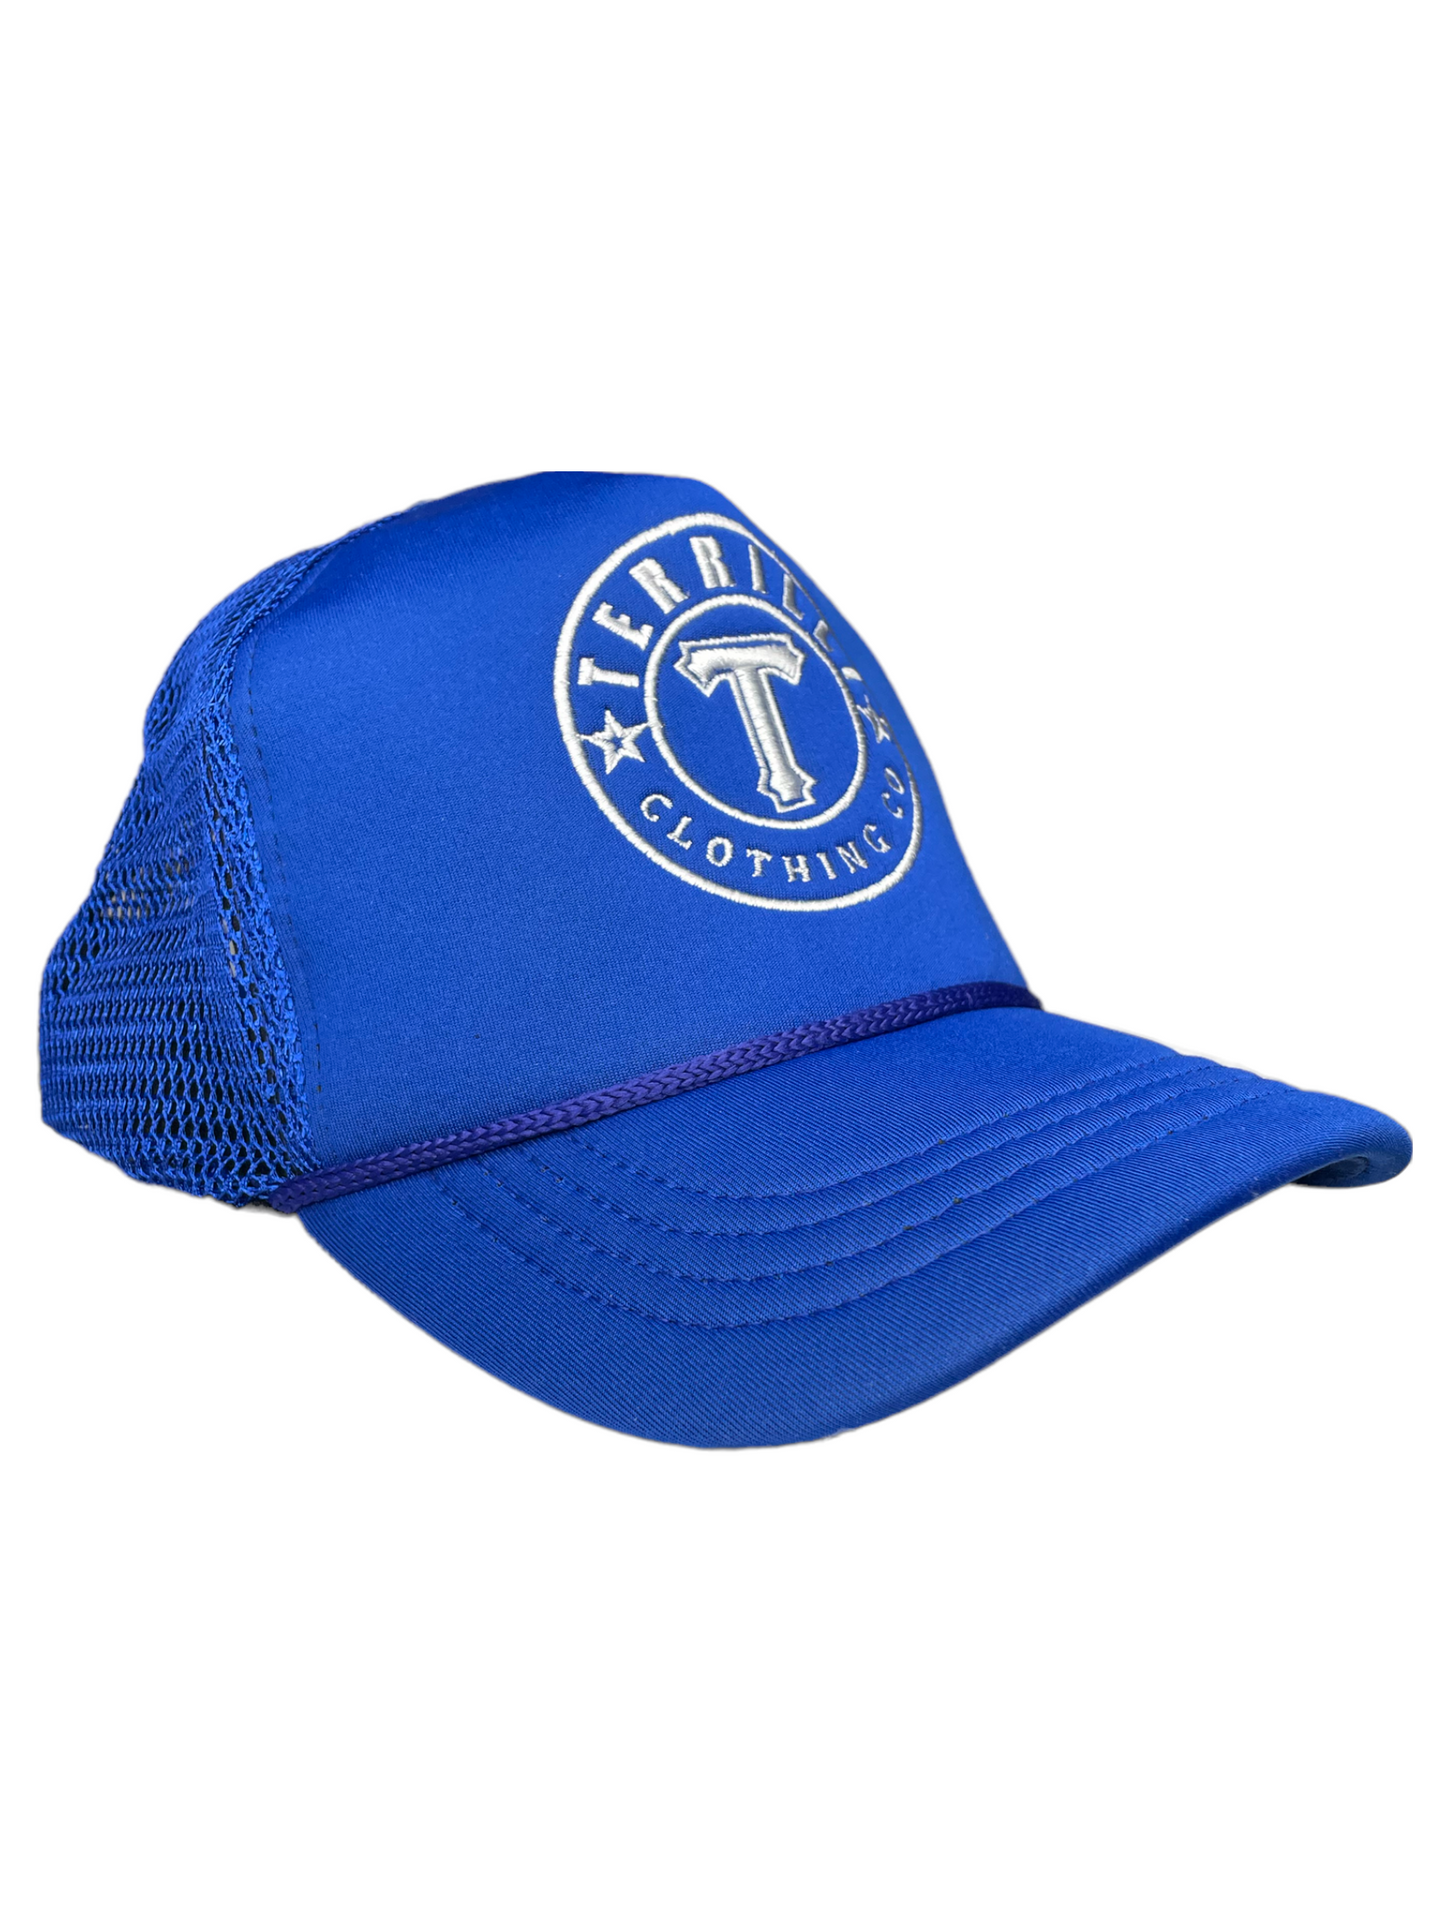 Terrilli Clothing Co. Foam Trucker Hat (Royal)